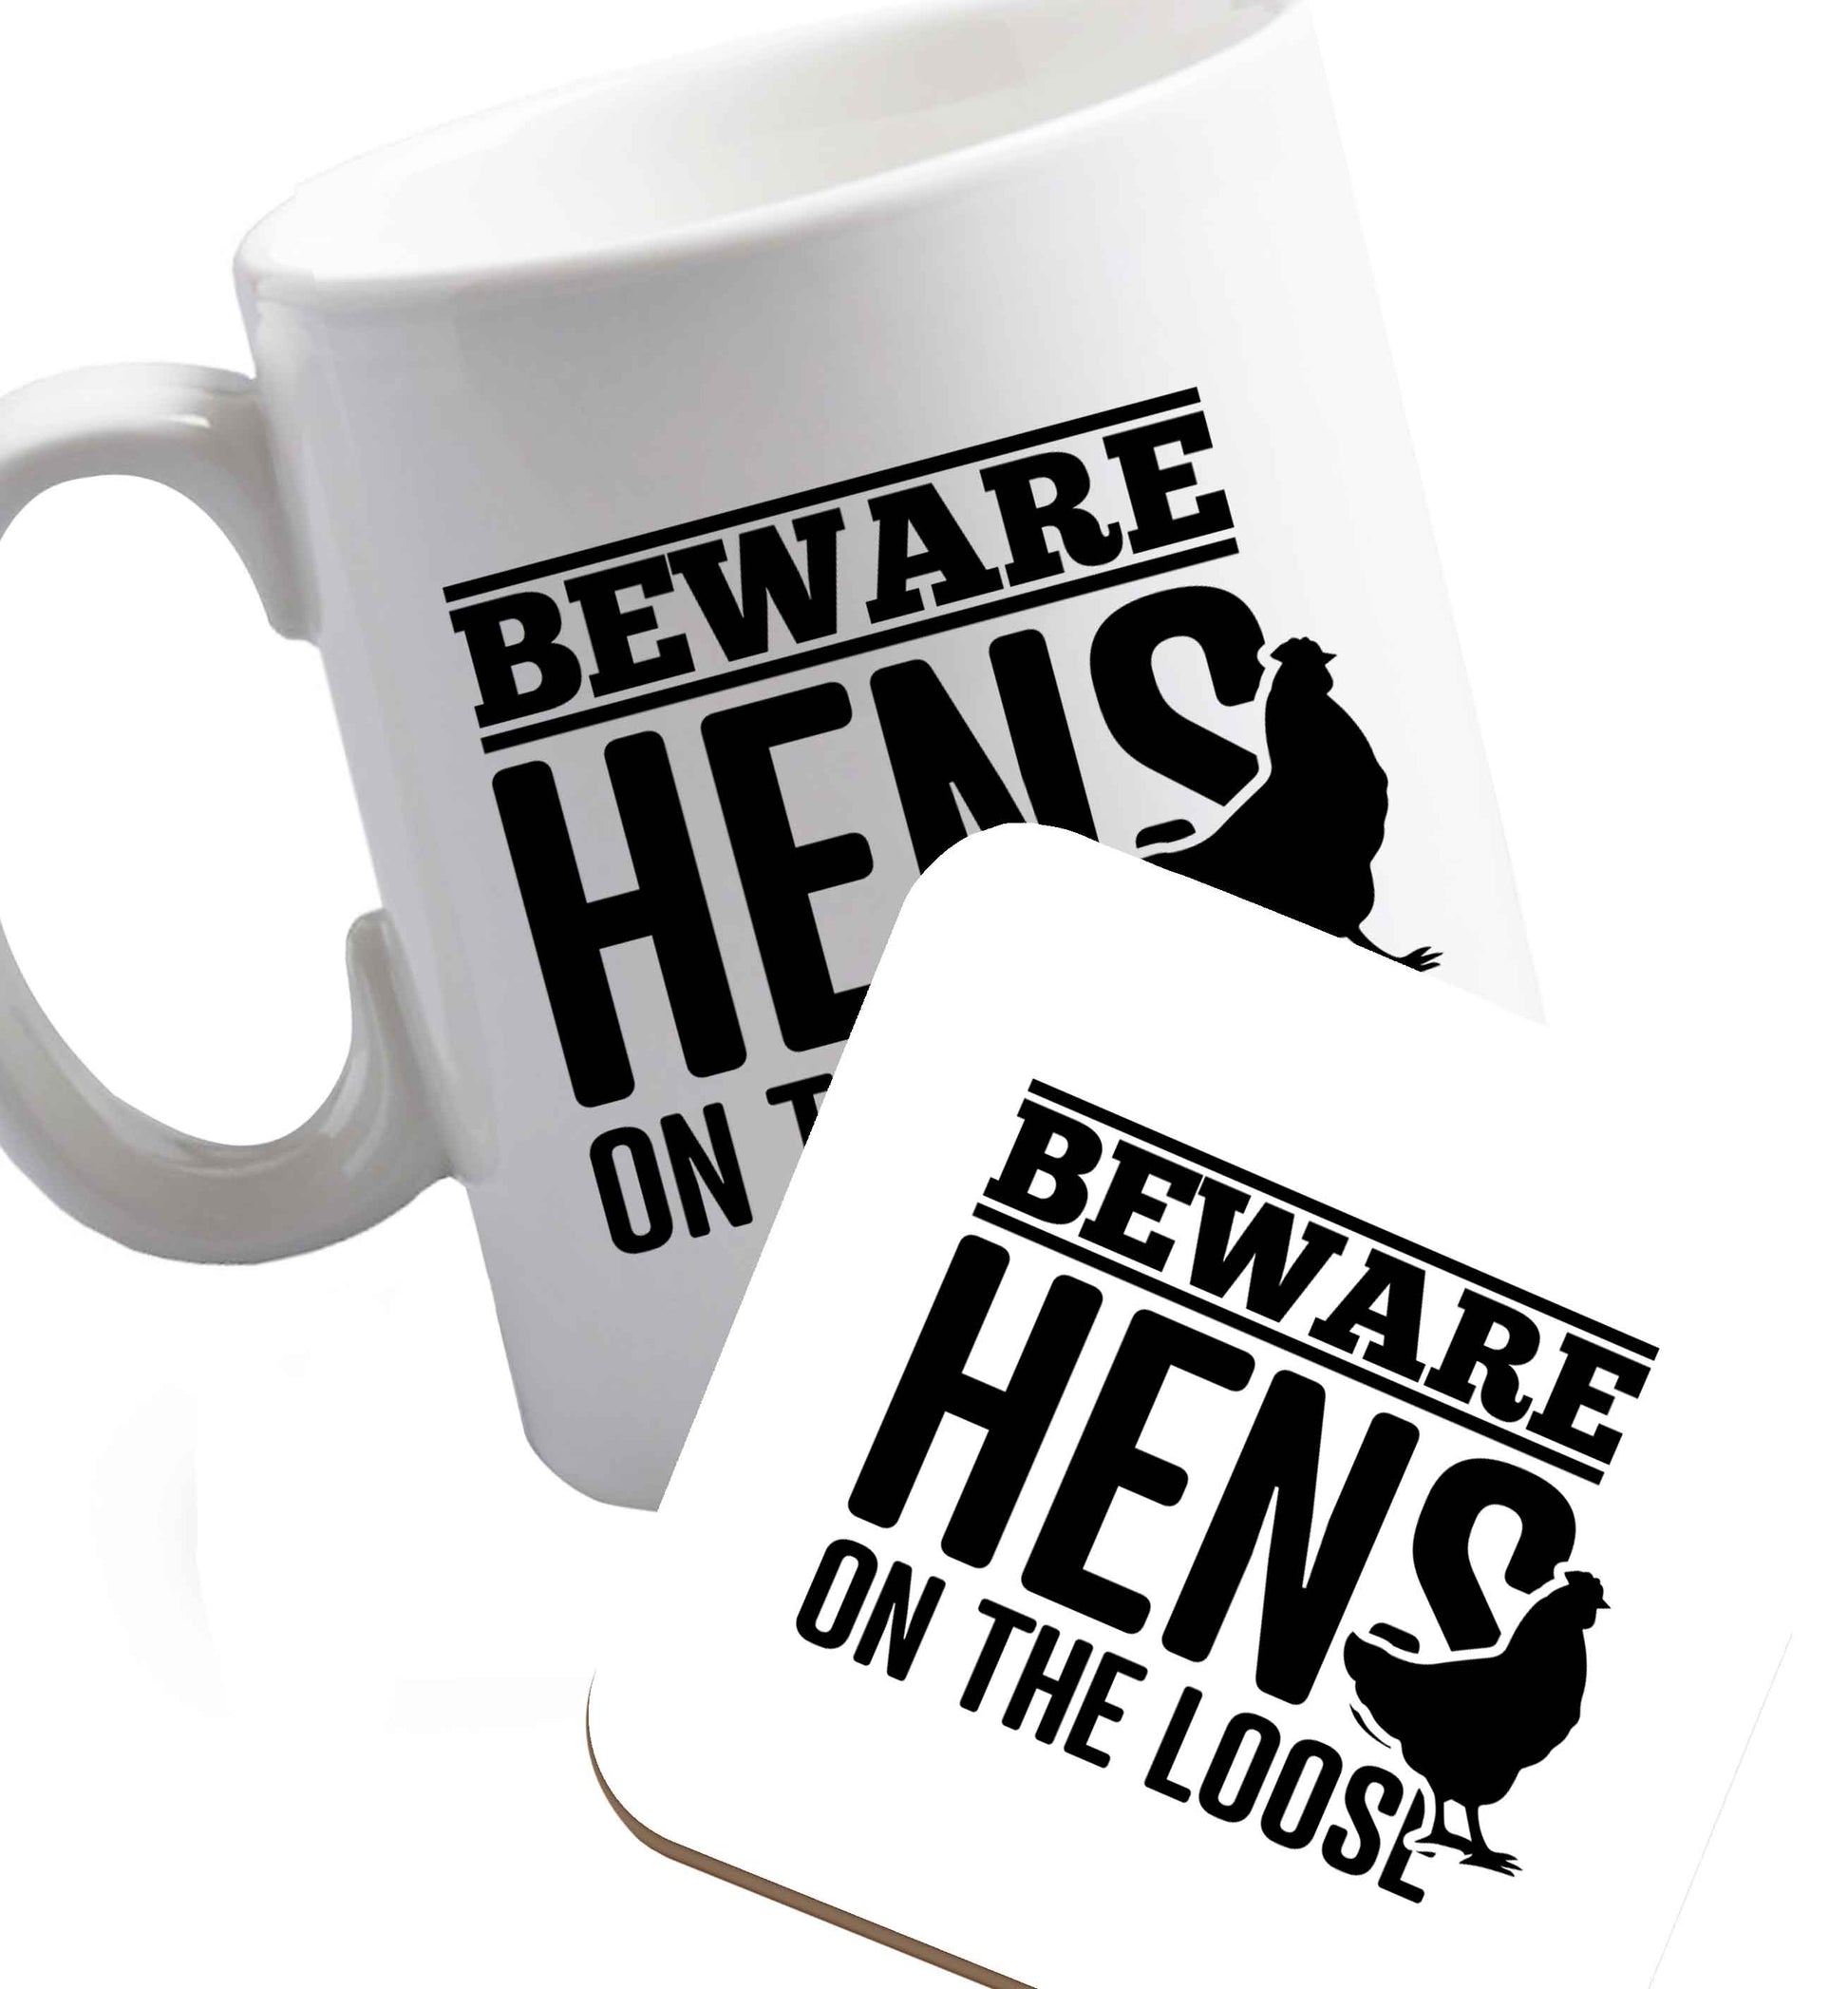 10 oz Beware hens on the loose   ceramic mug and coaster set right handed